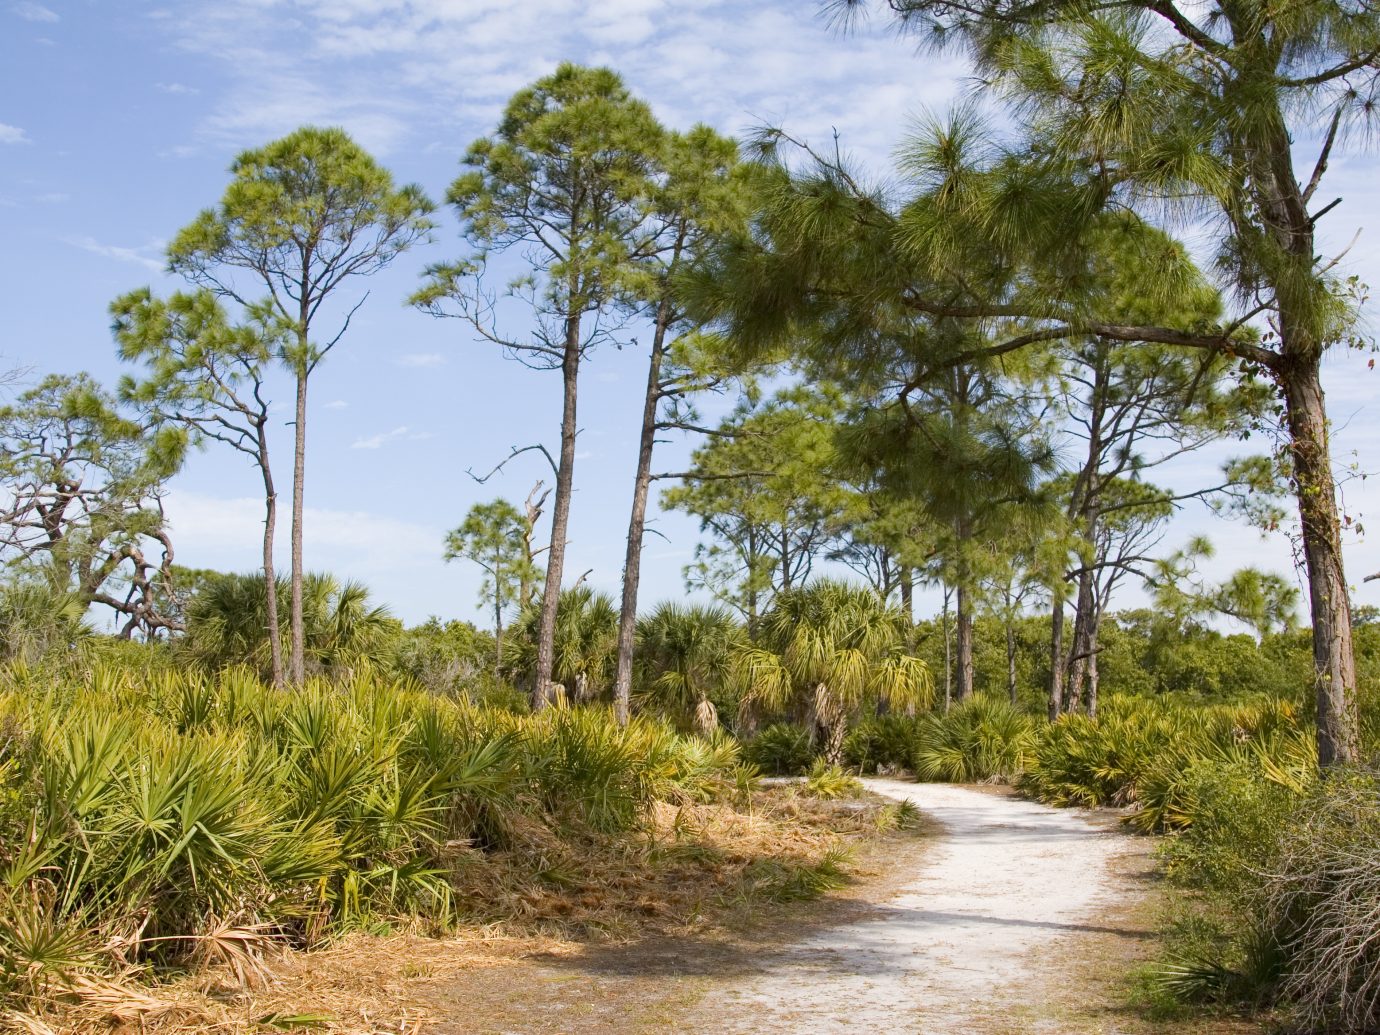 Caladesi Island, a natural beauty on Florida's Gulf Coast